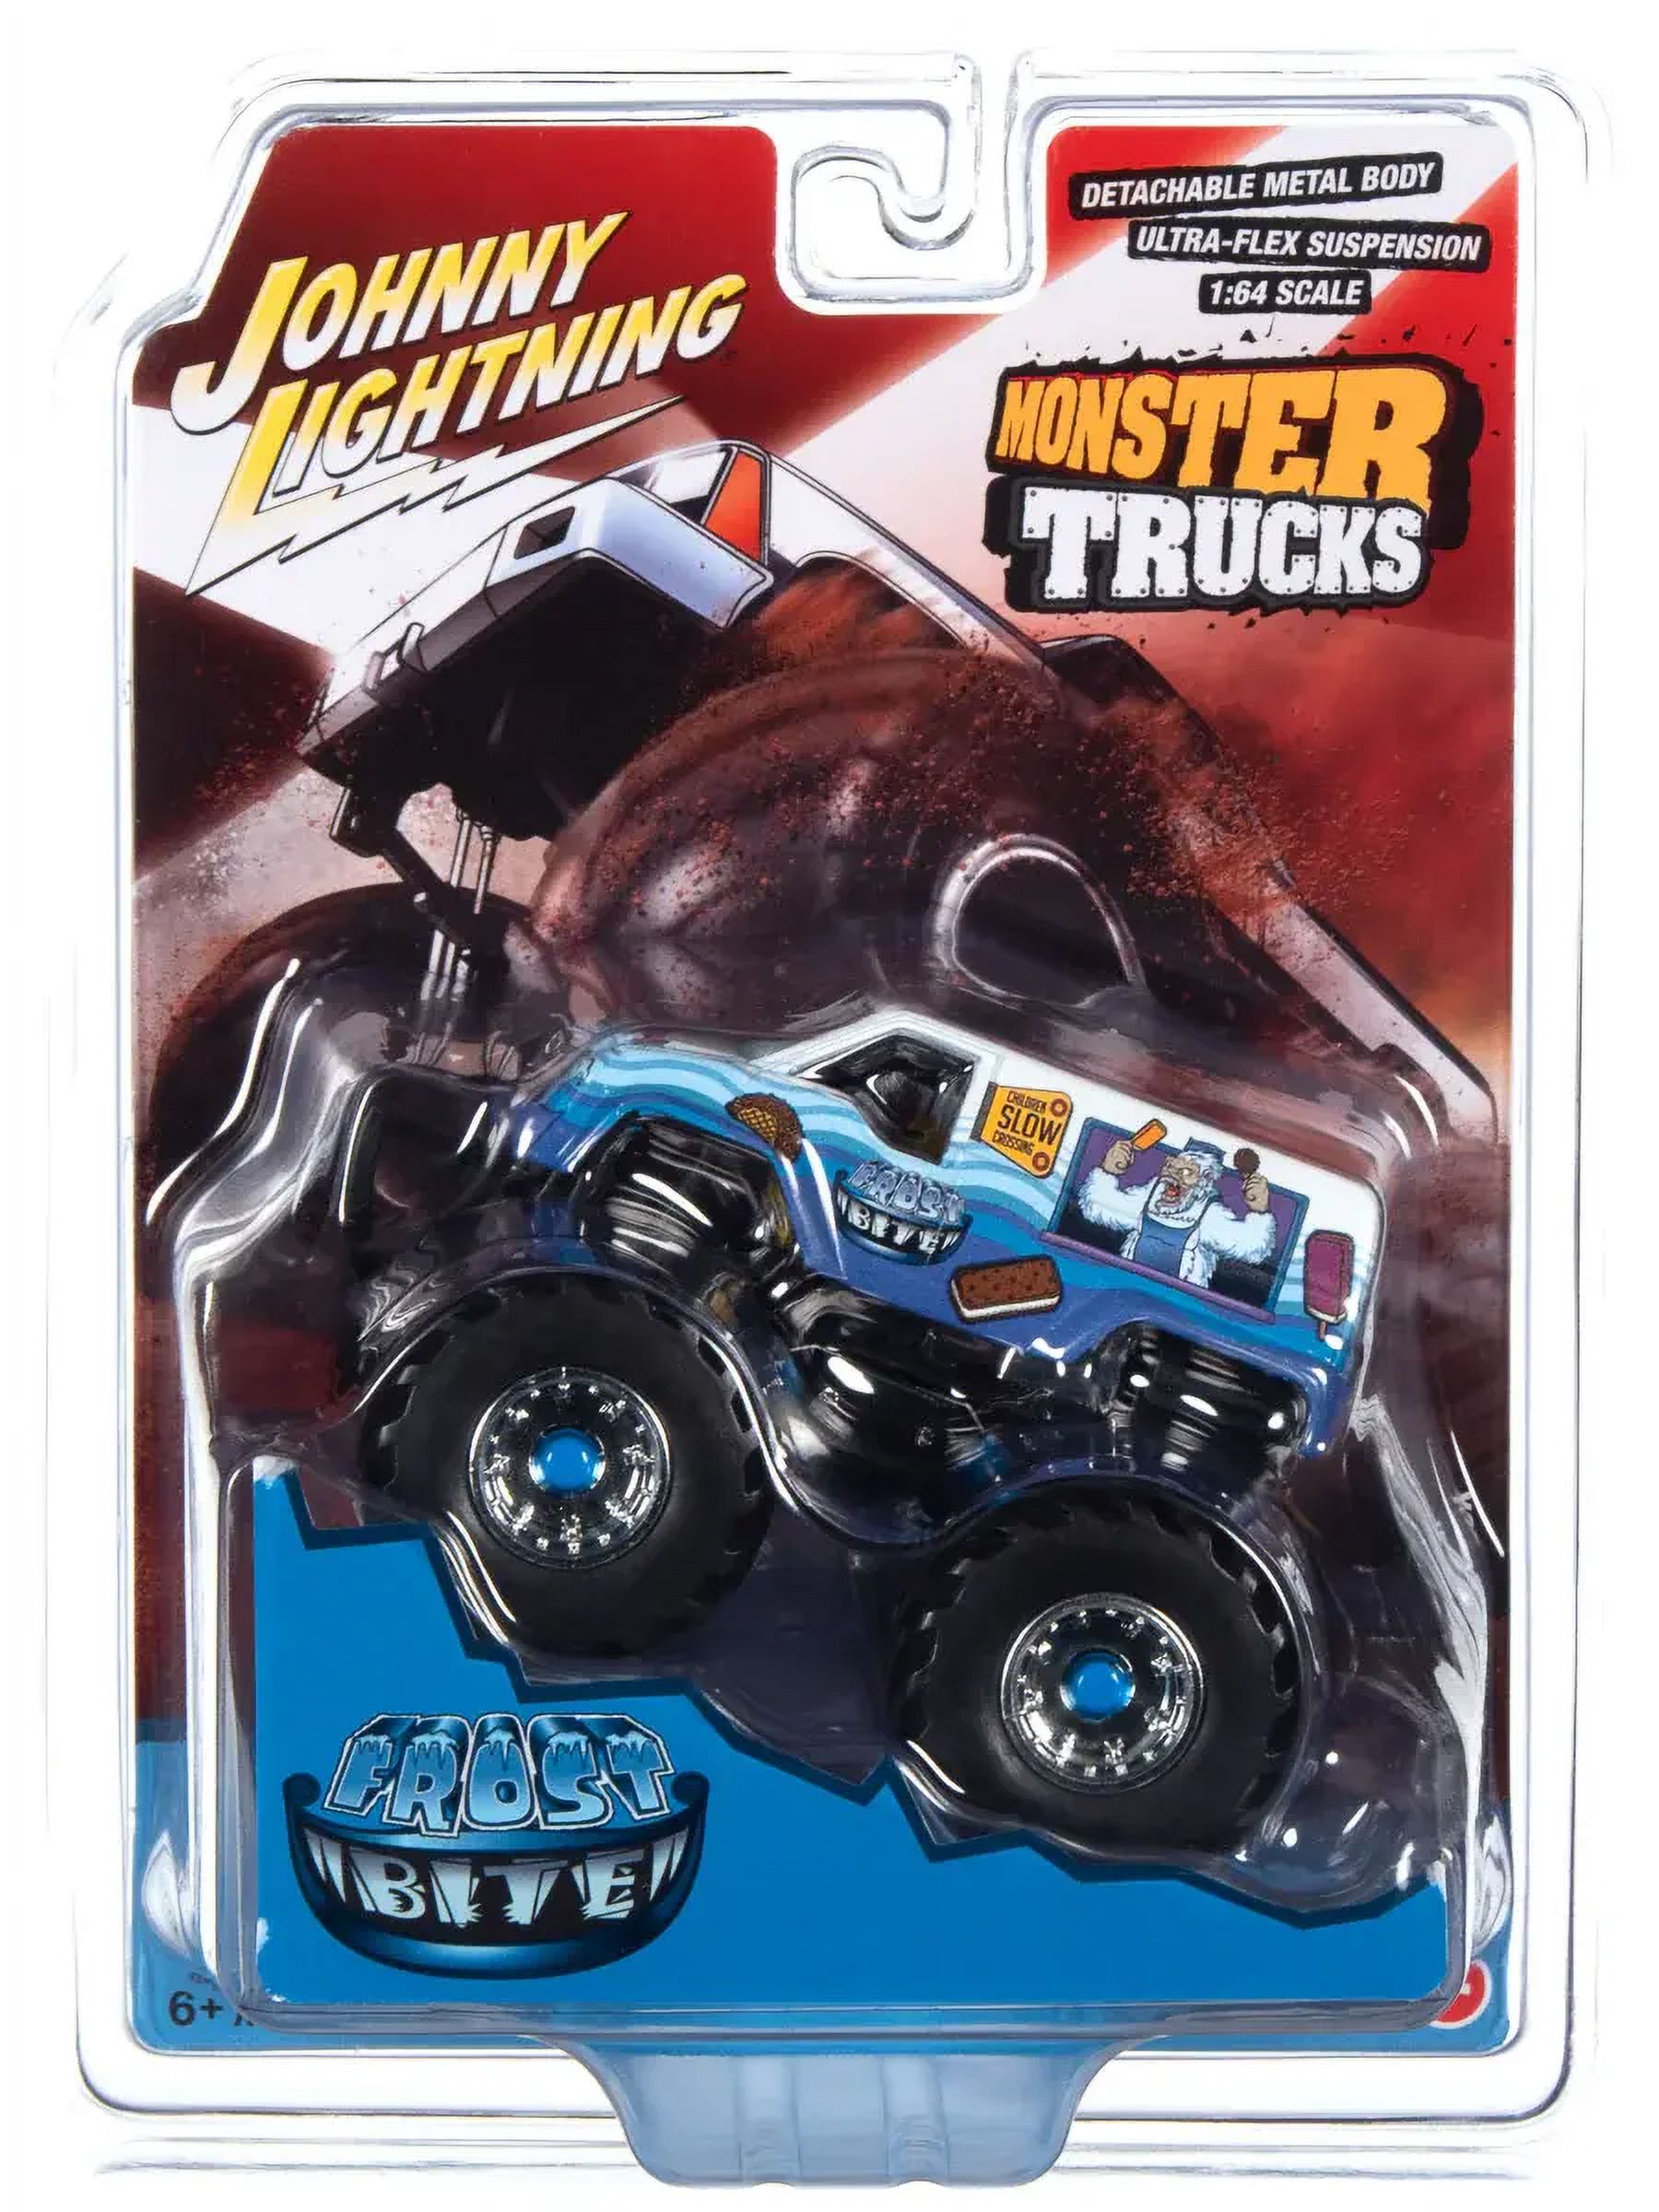 Johnny Lightning JLSP308 Frost Bite Monster I Scream You Scream with Black Wheels & Driver Figure Monster Trucks Series 1 by 64 Scale Diecast Mod